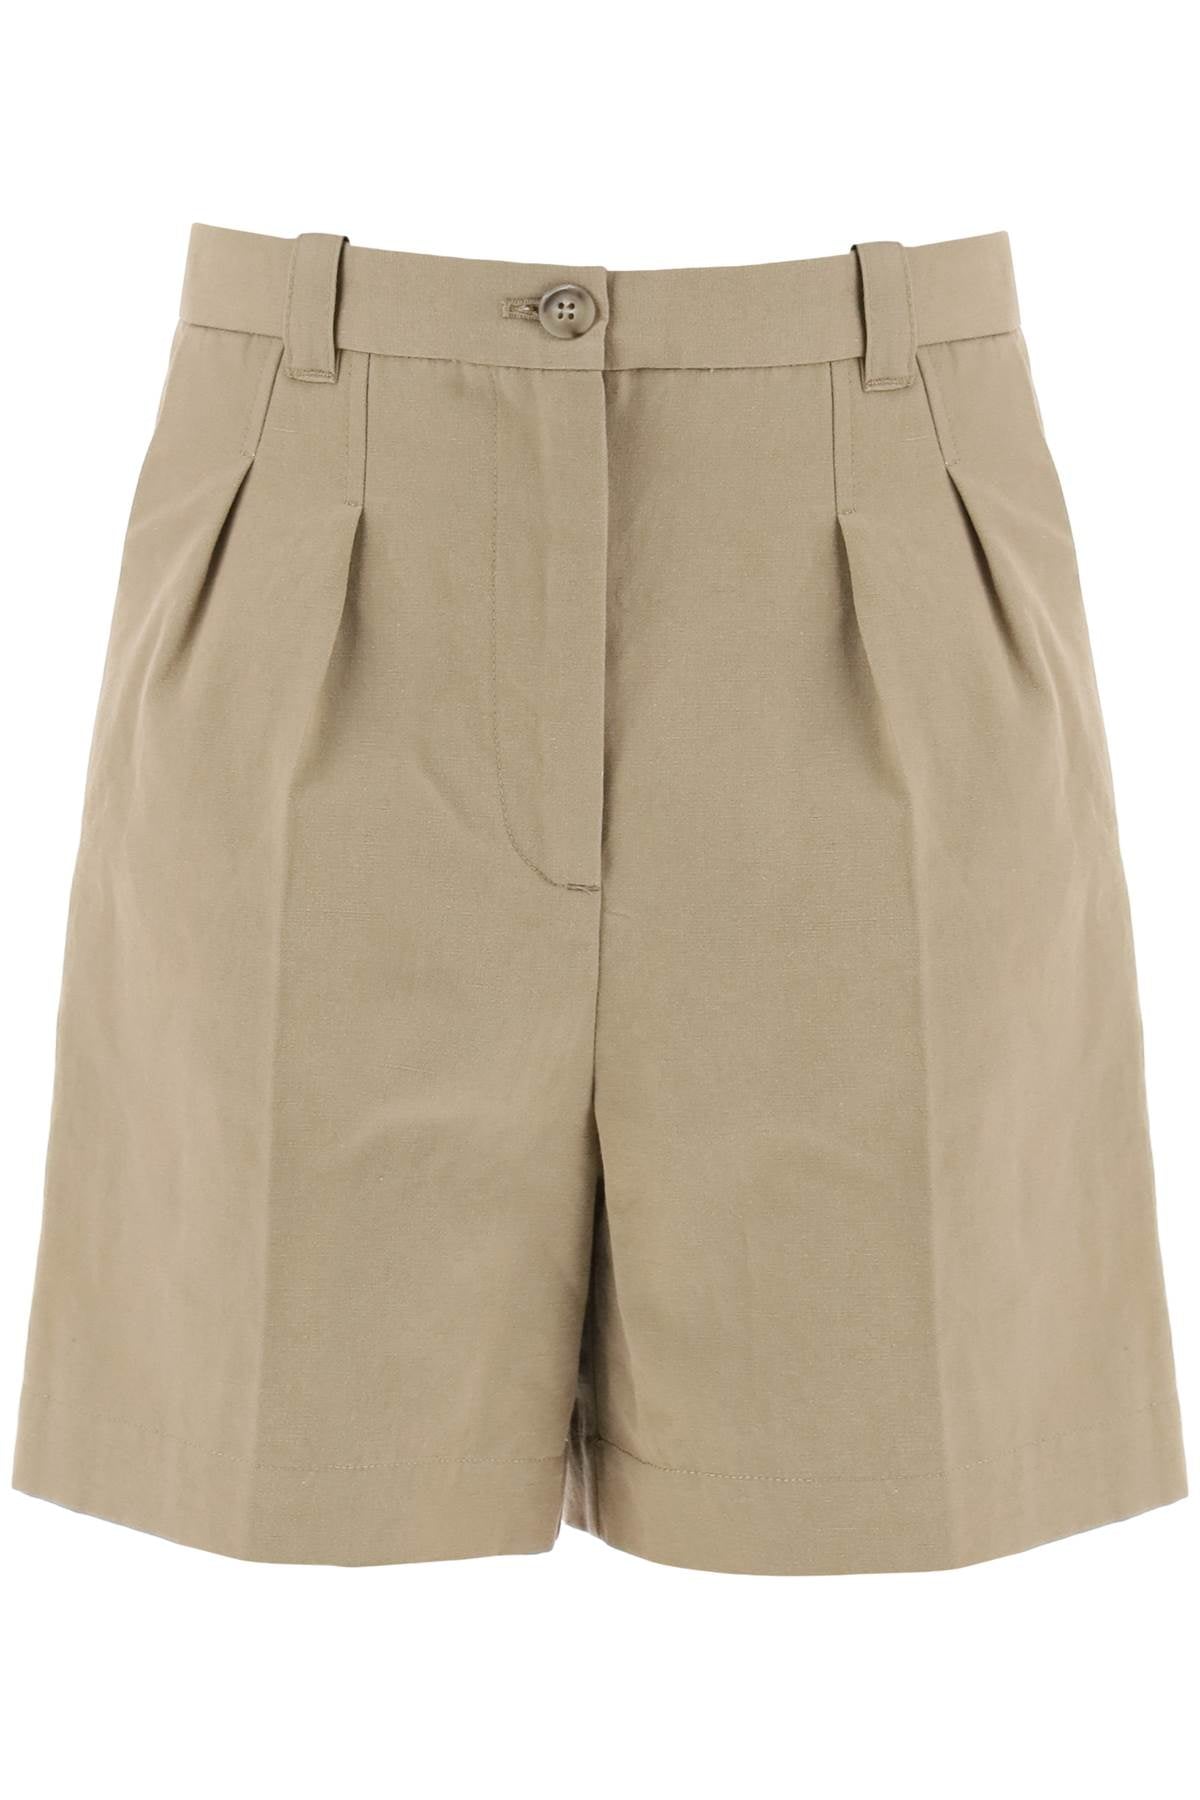 A.P.C. A.p.c. cotton and linen nola shorts for